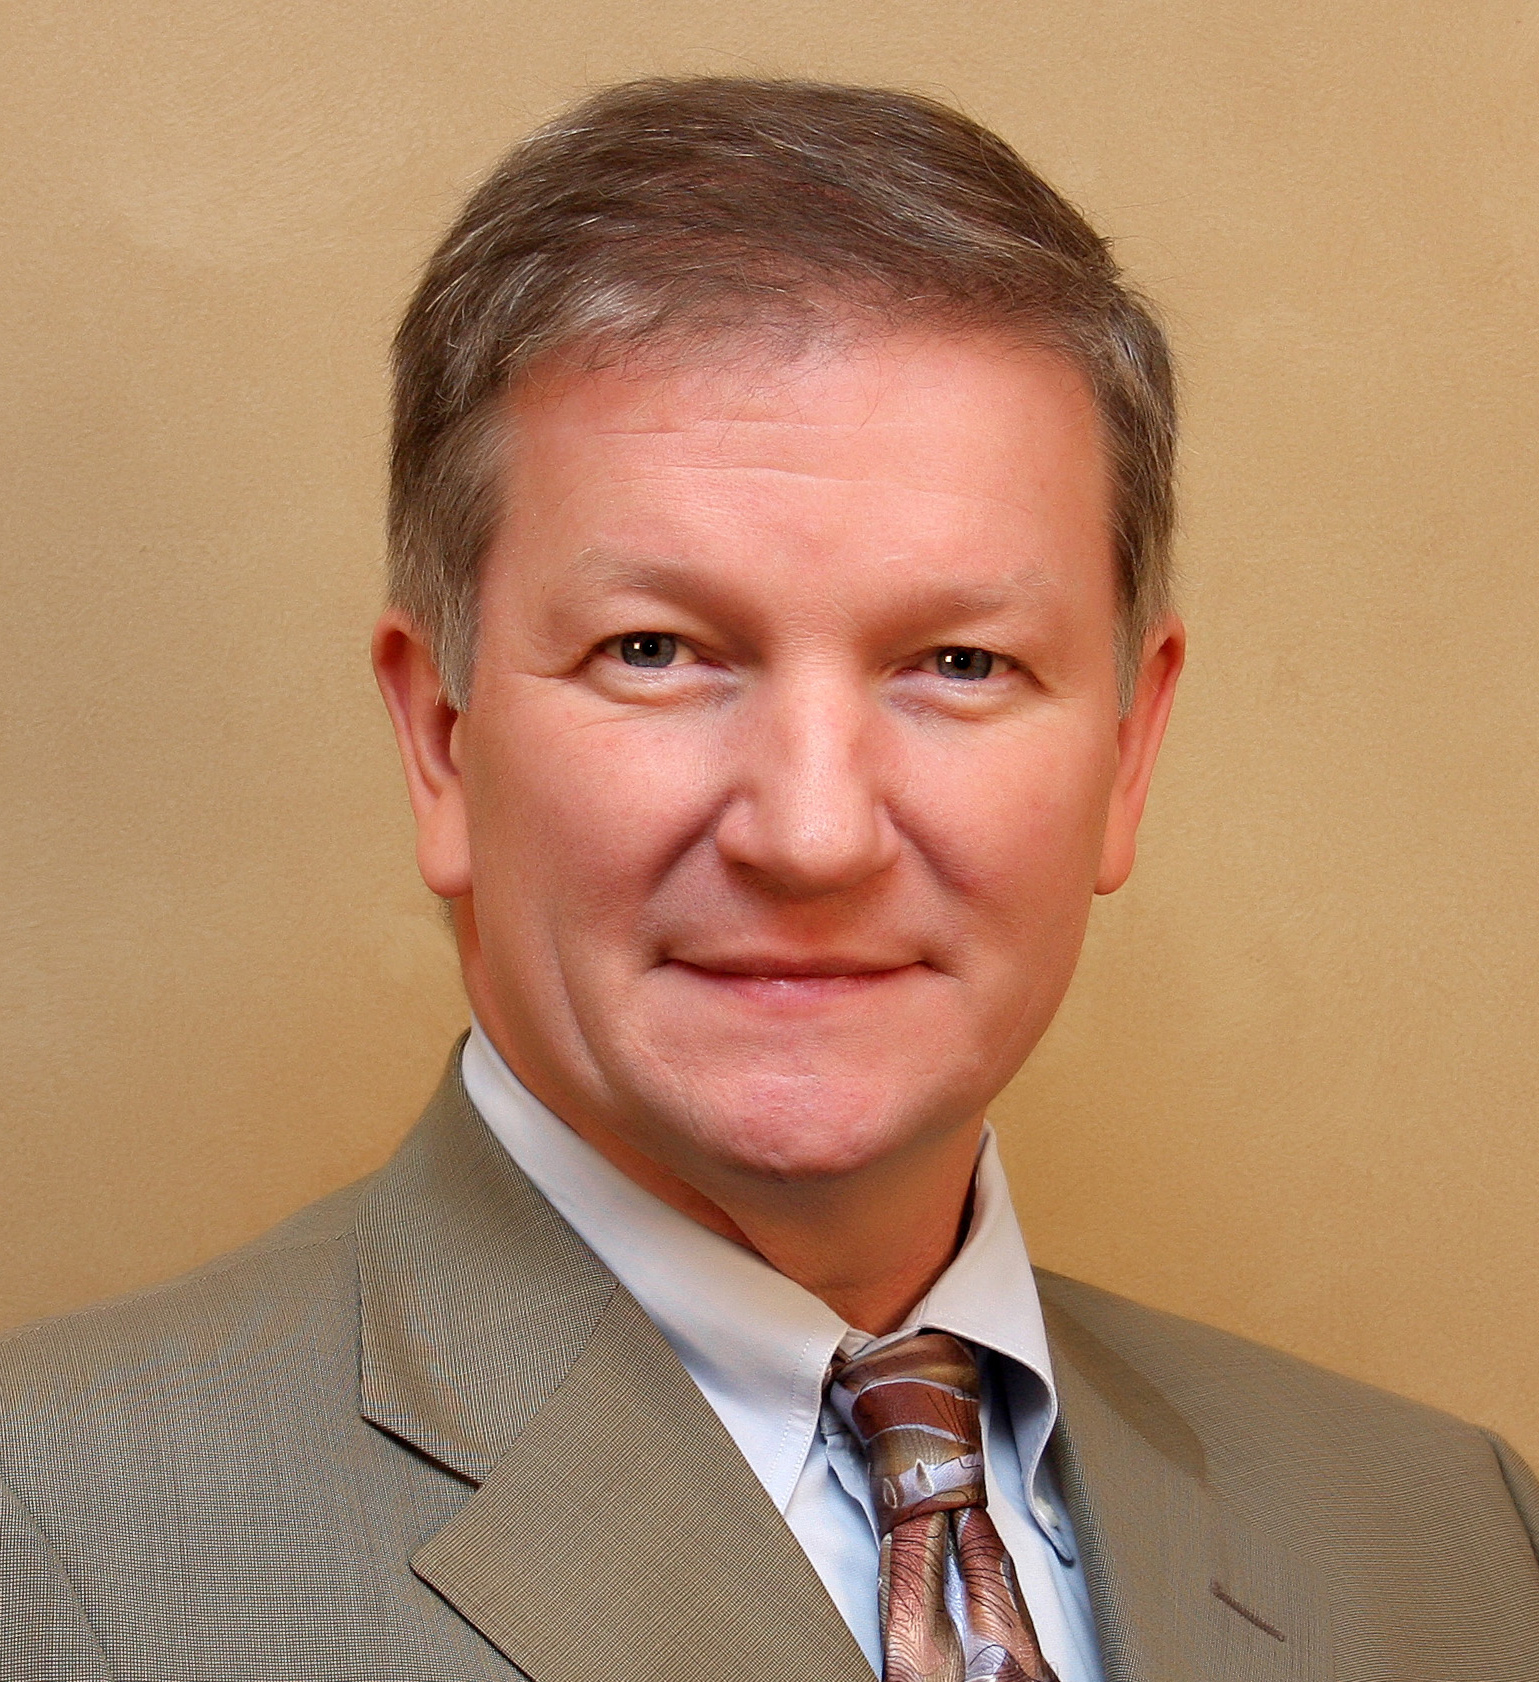 Dr. Scott Gibbs on spine surgeon leadership